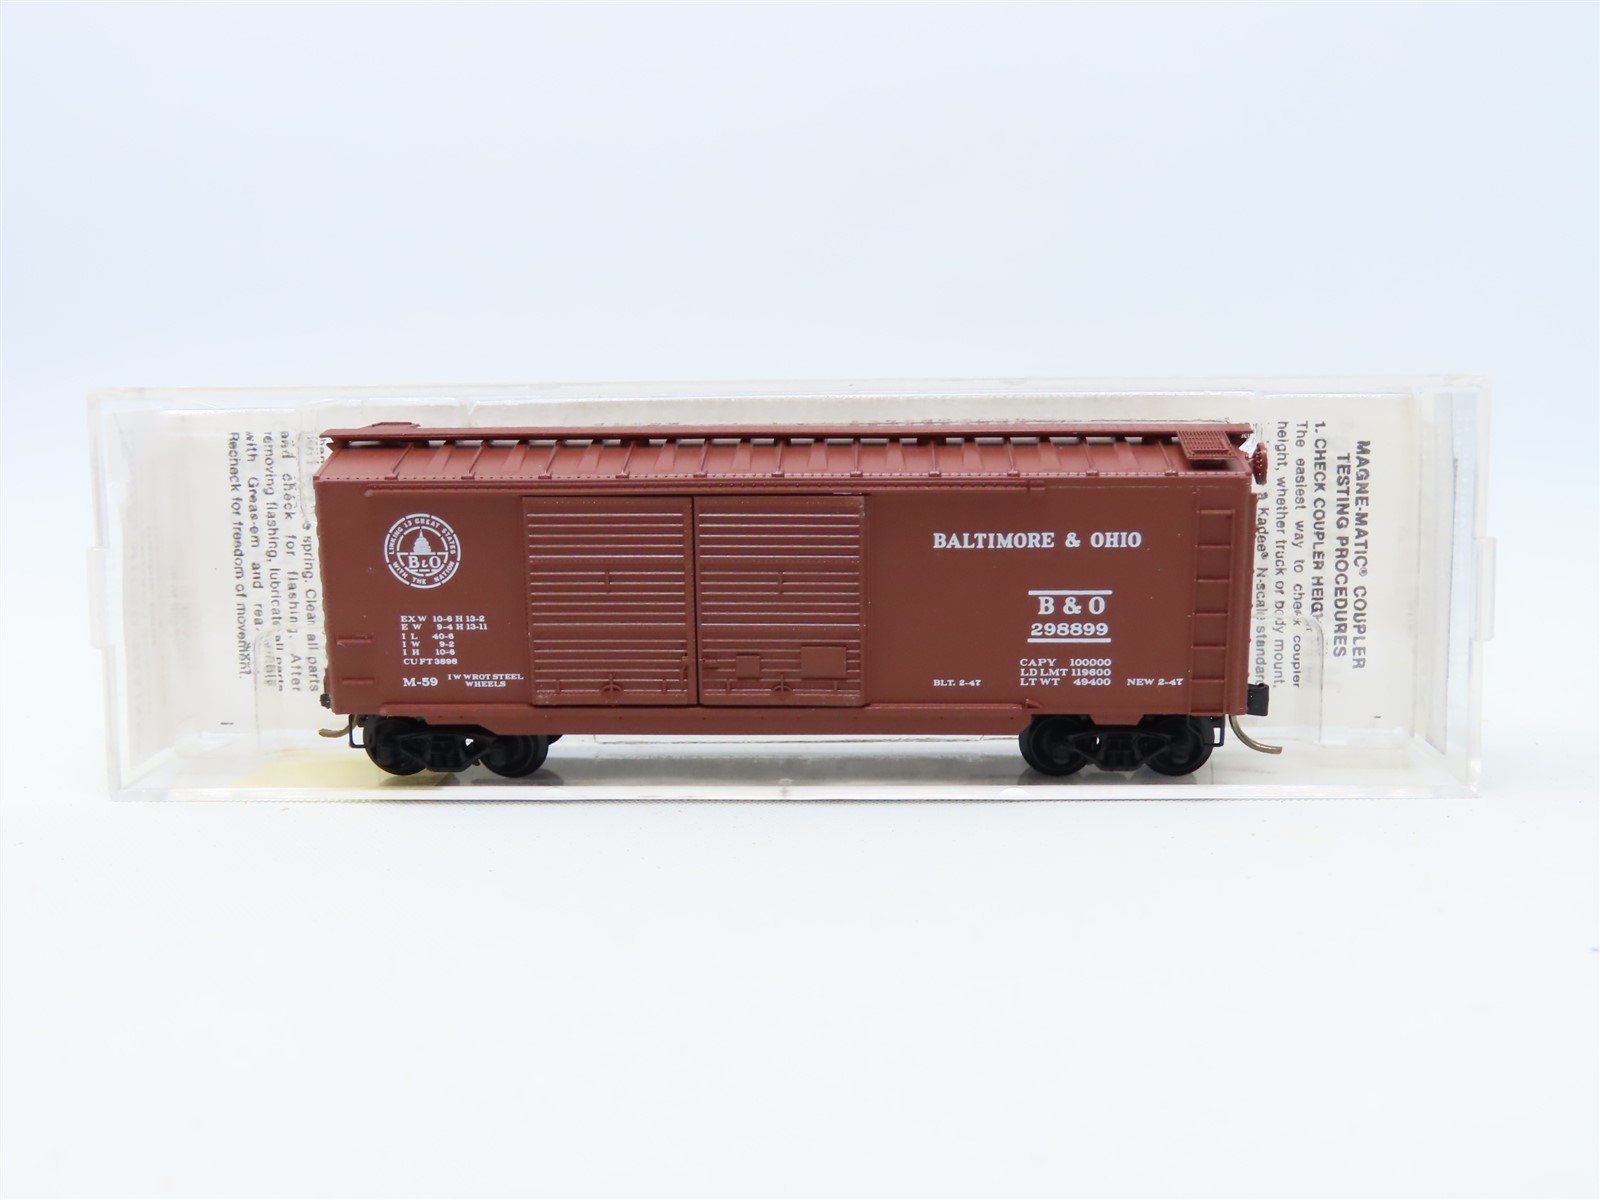 N Scale Kadee Micro-Trains MTL #23040 B&O Baltimore & Ohio 40' Box Car #298899